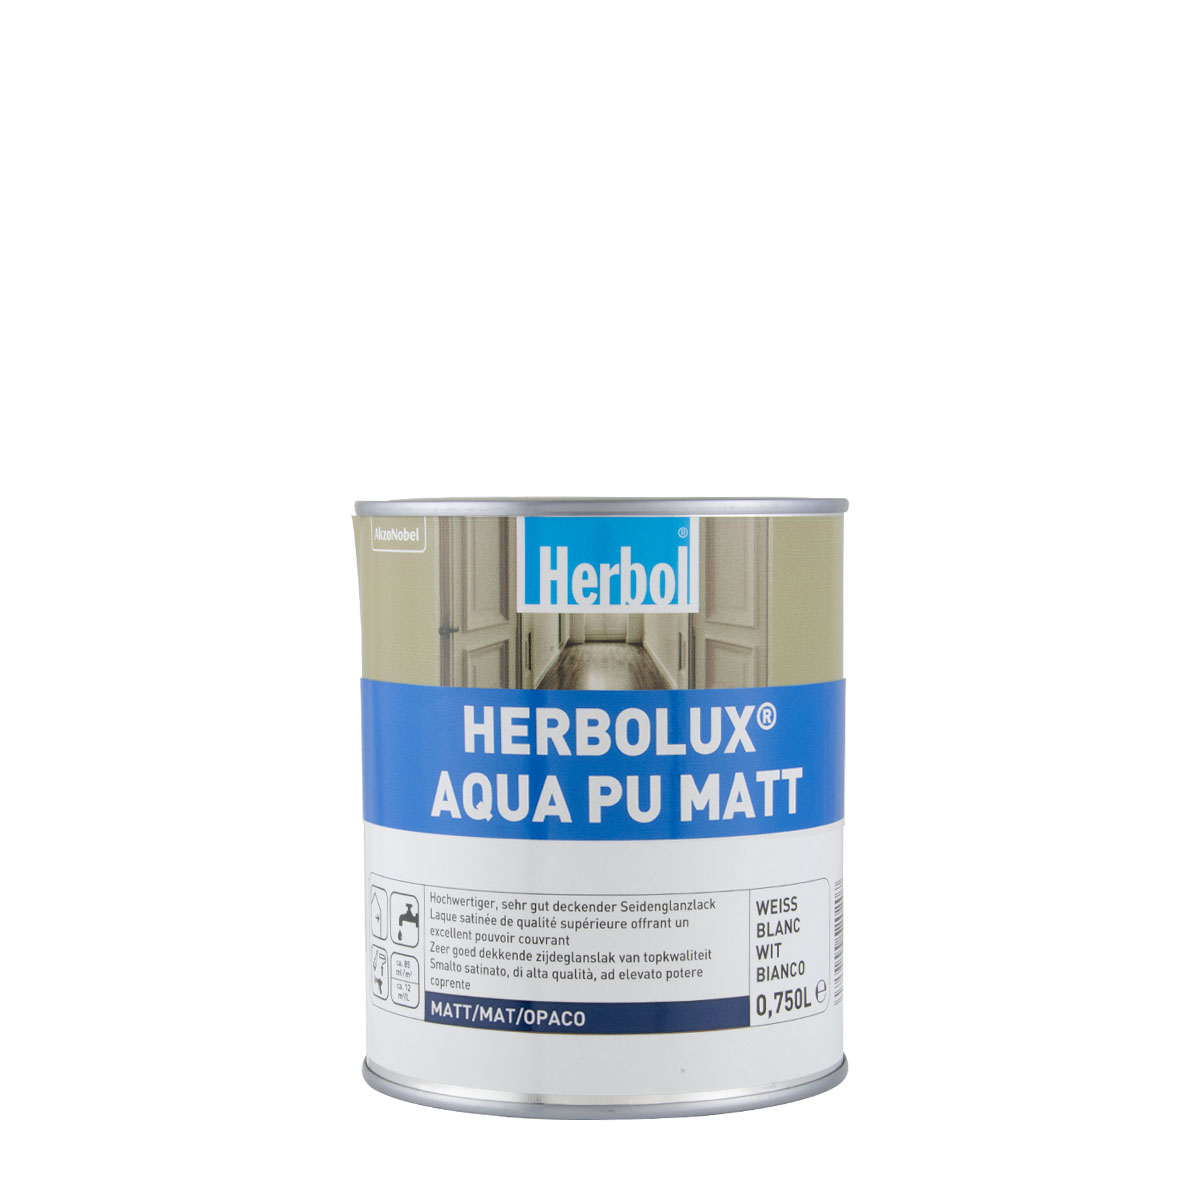 Herbol Herbolux Aqua Pu Matt 750ml weiss, Mattlack